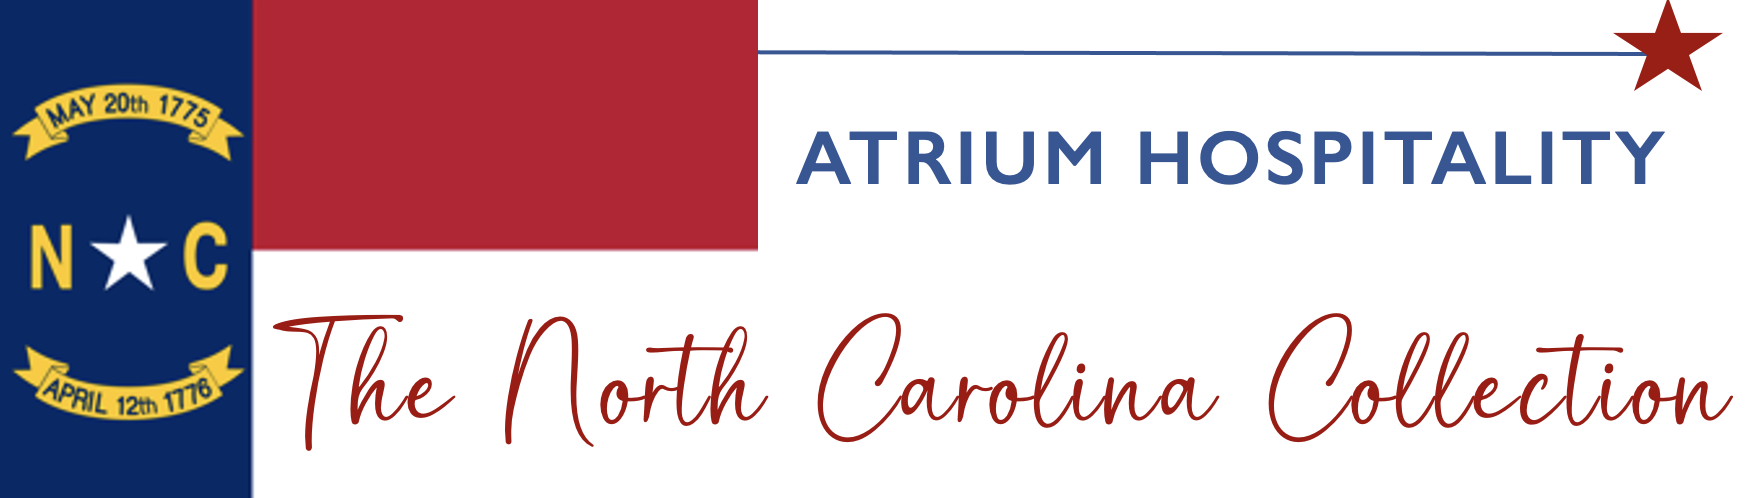 Atrium Hospitality: The North Carolina Collection